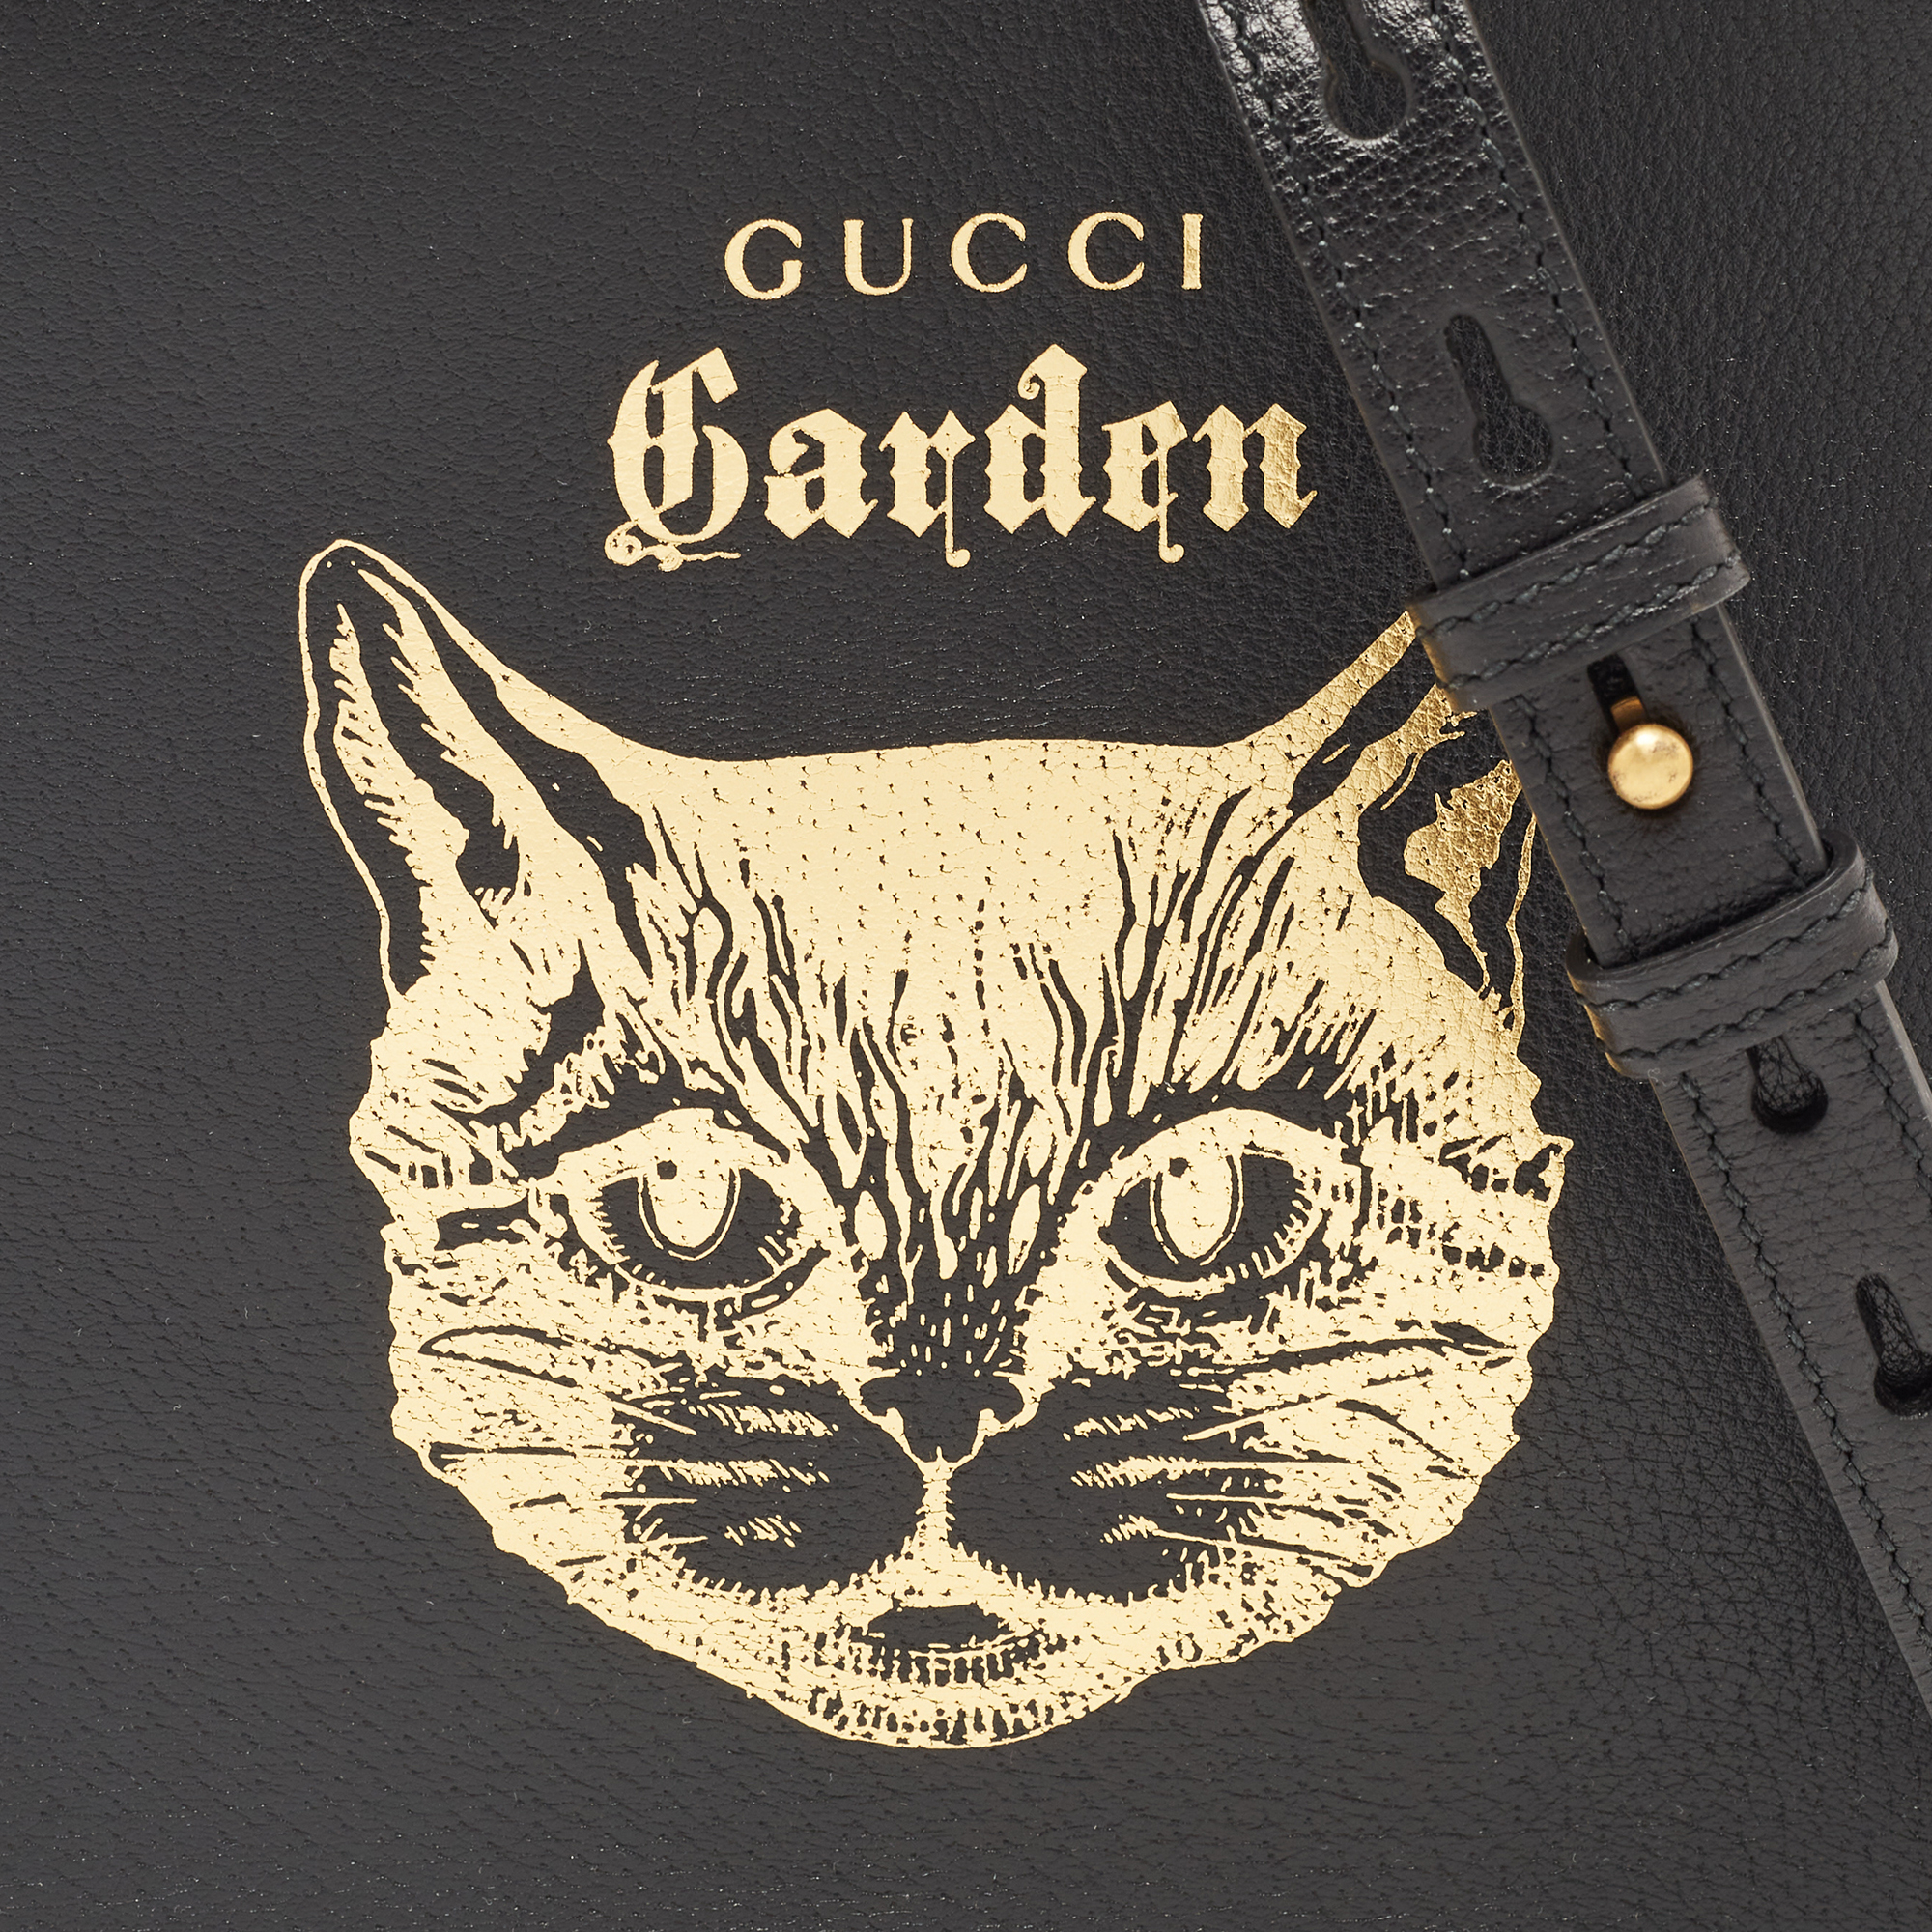 Gucci Garden Black Leather Cat Print Tote